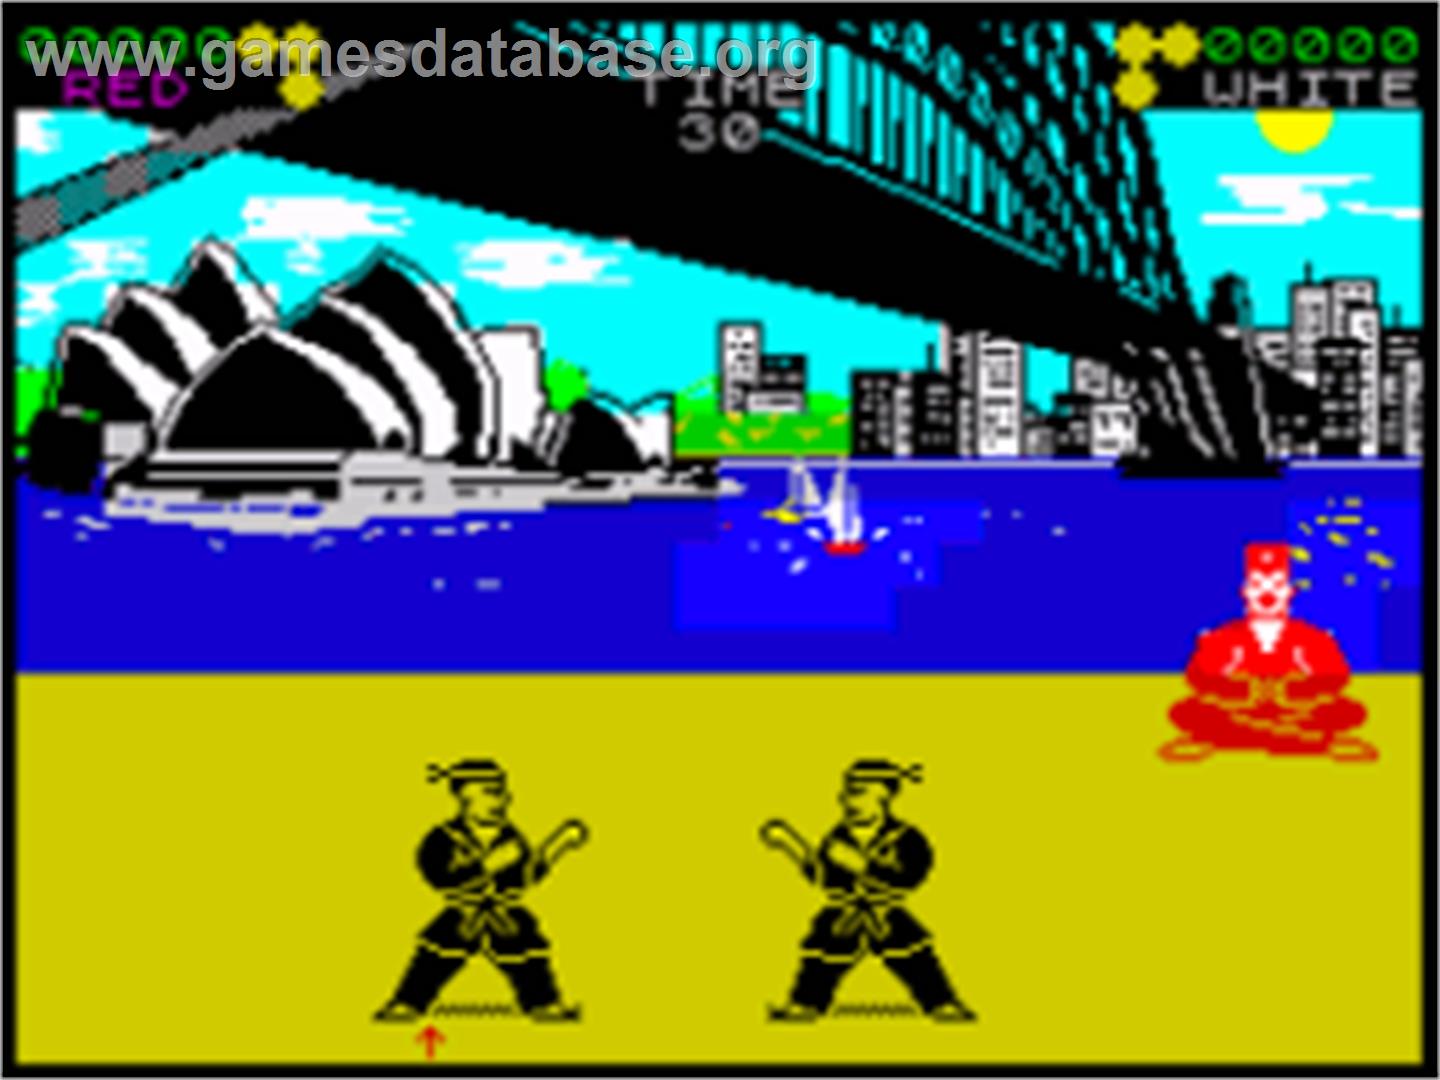 International 5-A-Side - Sinclair ZX Spectrum - Artwork - In Game